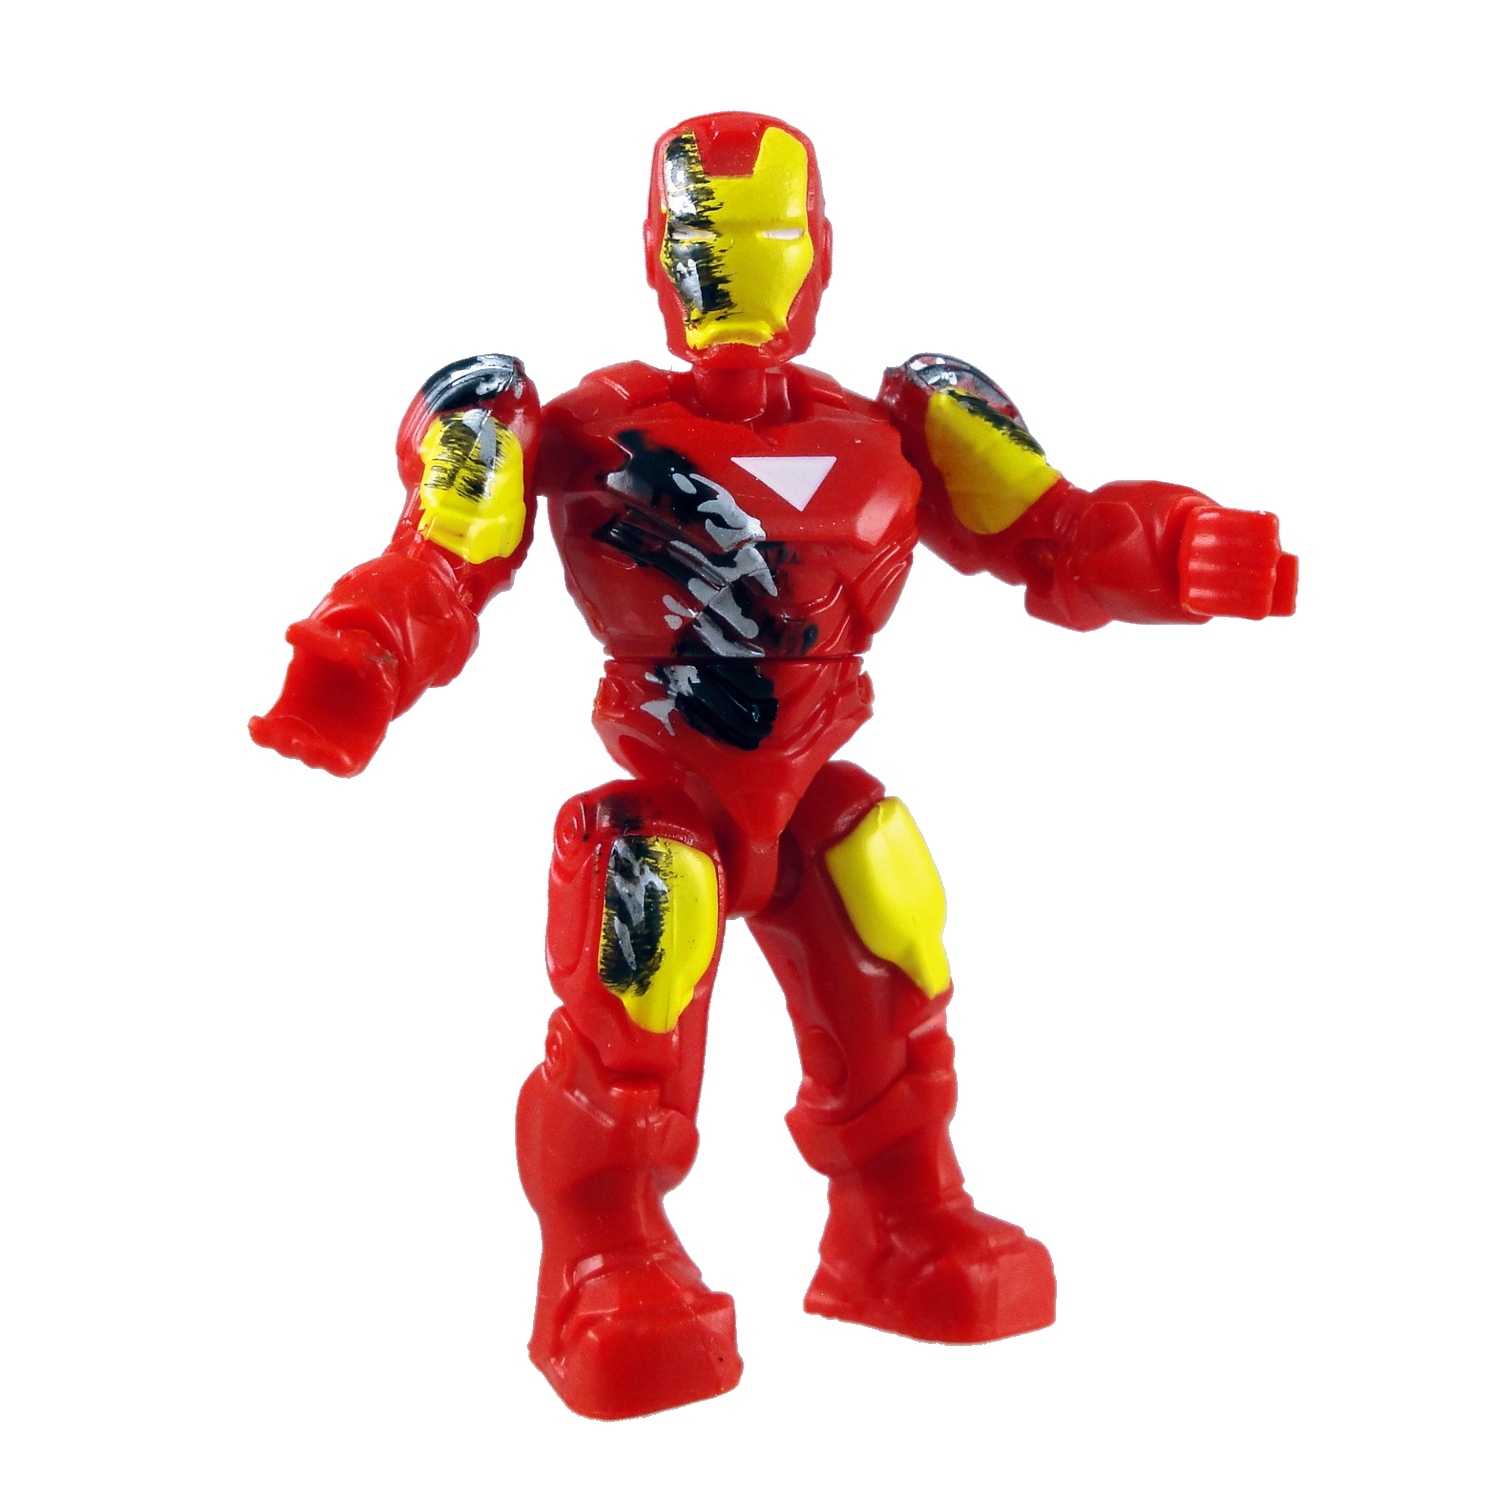 2011 Marvel Mega Bloks Series 1 Wave 1 Blind Bag Battle-Damaged Iron Man Retired 